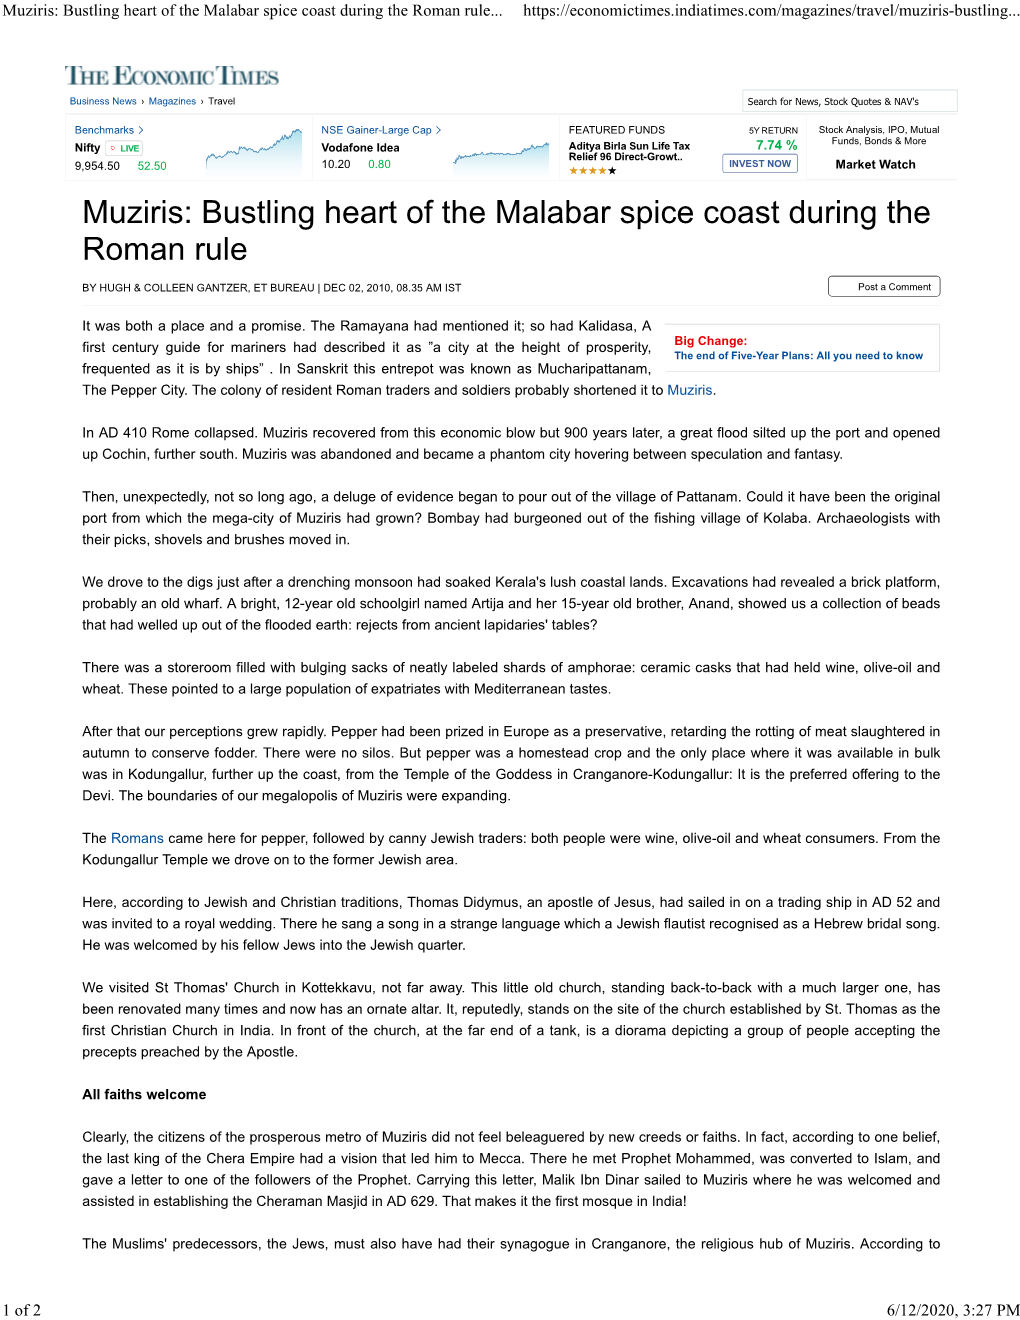 Muziris: Bustling Heart of the Malabar Spice Coast During the Roman Rule